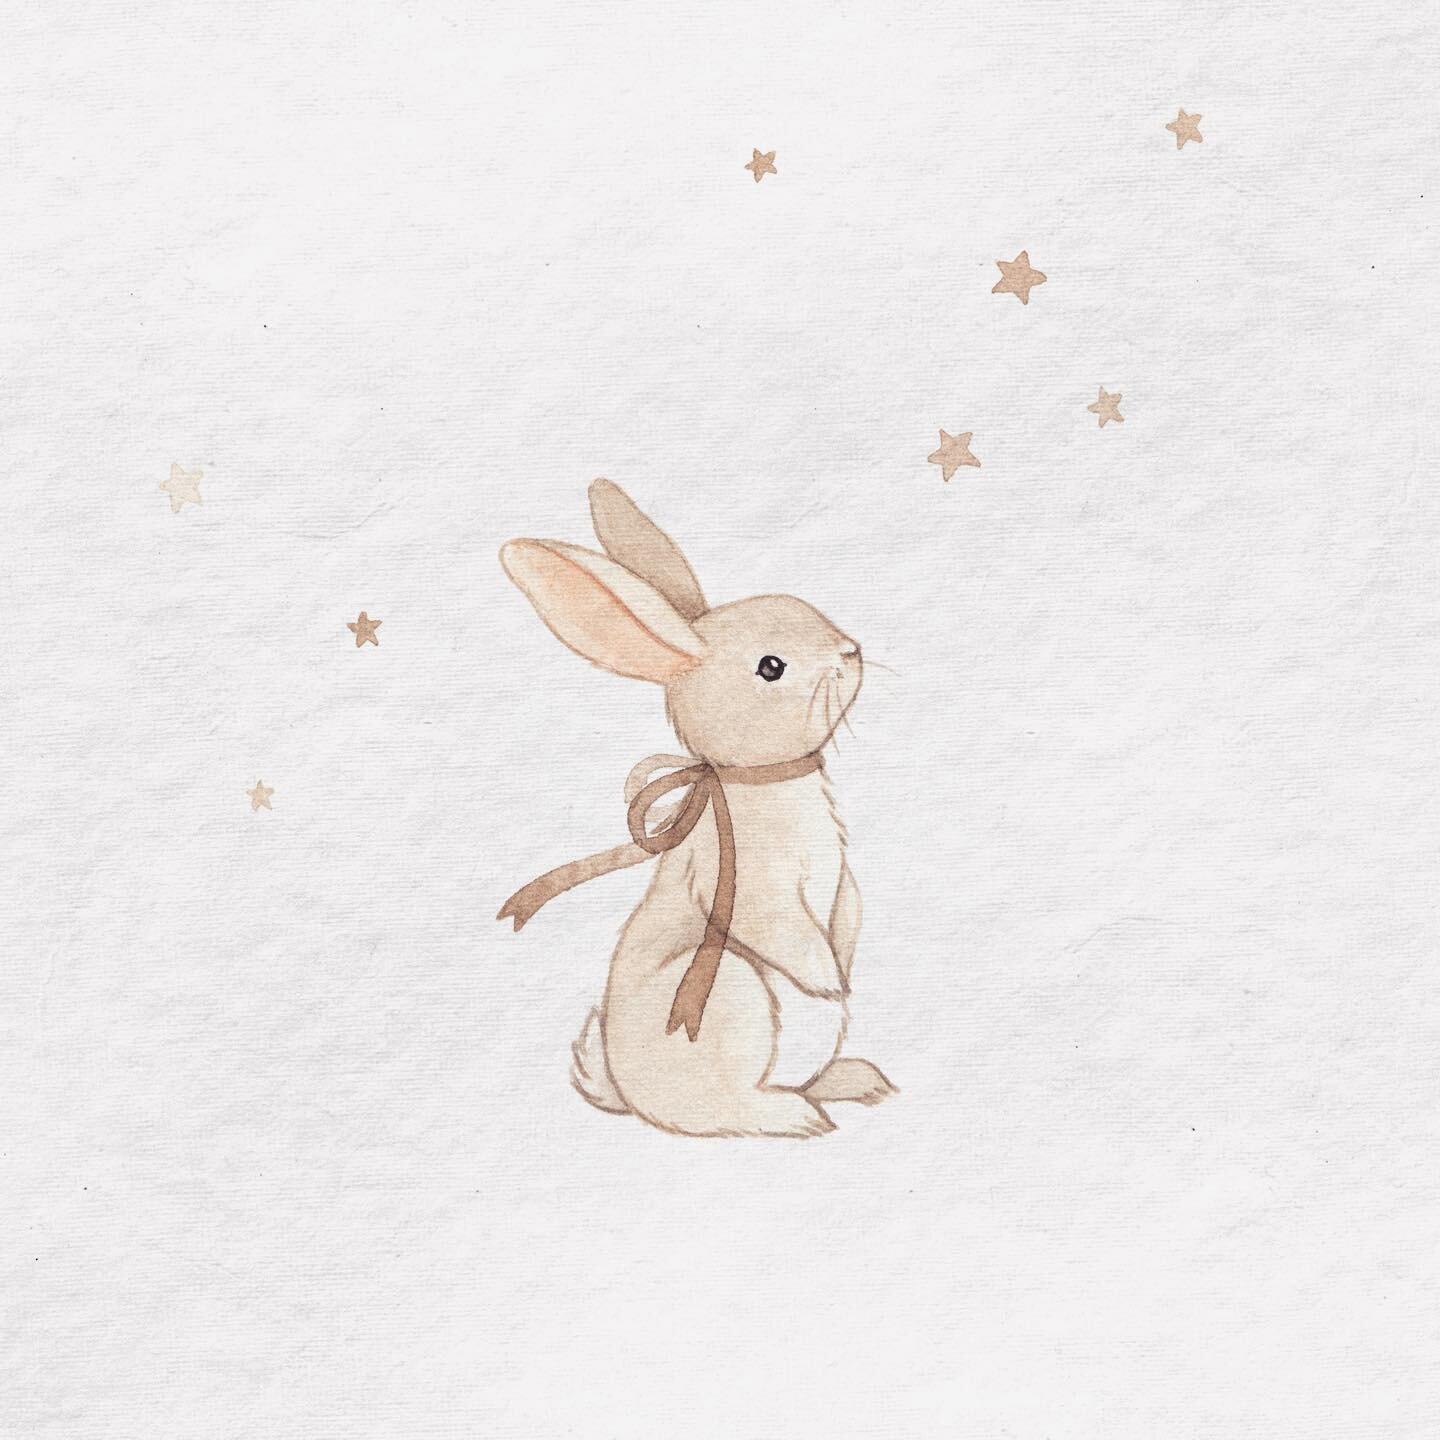 Twinkle twinkle little star, I hope your Wednesday has been lovely so far 🌟 Simple little watercolor doodle for today! #doodle #bunny #watercolor #stars #workinprogess #art #artist #rabbit #color #pastel #woodlandnursery #woodlandanimals #cute #love